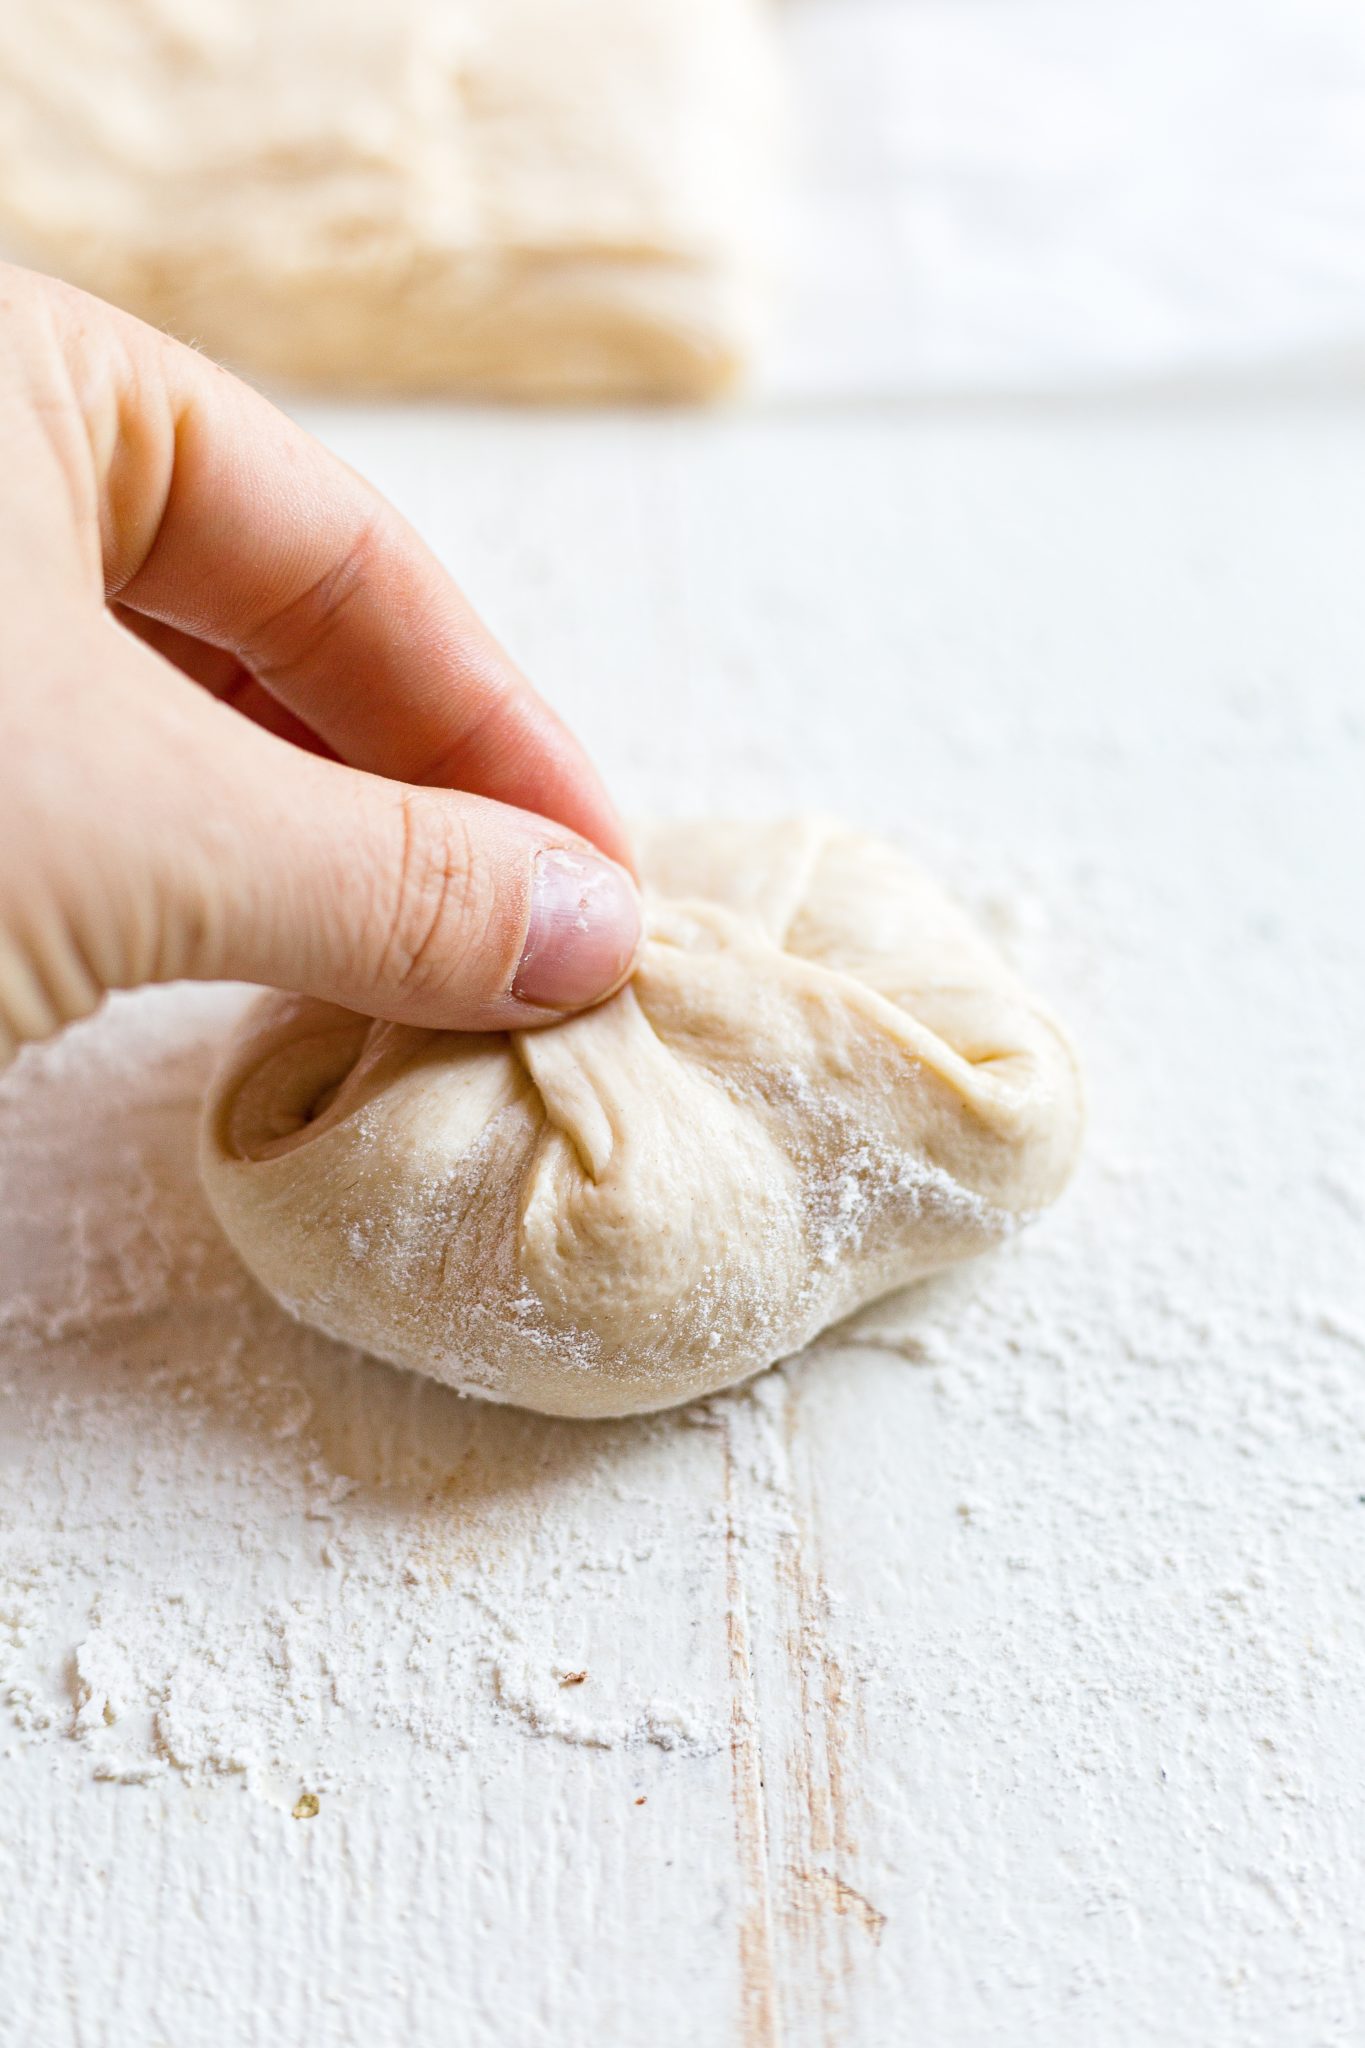 hand pinching sourdough bun dough together before rolling and baking